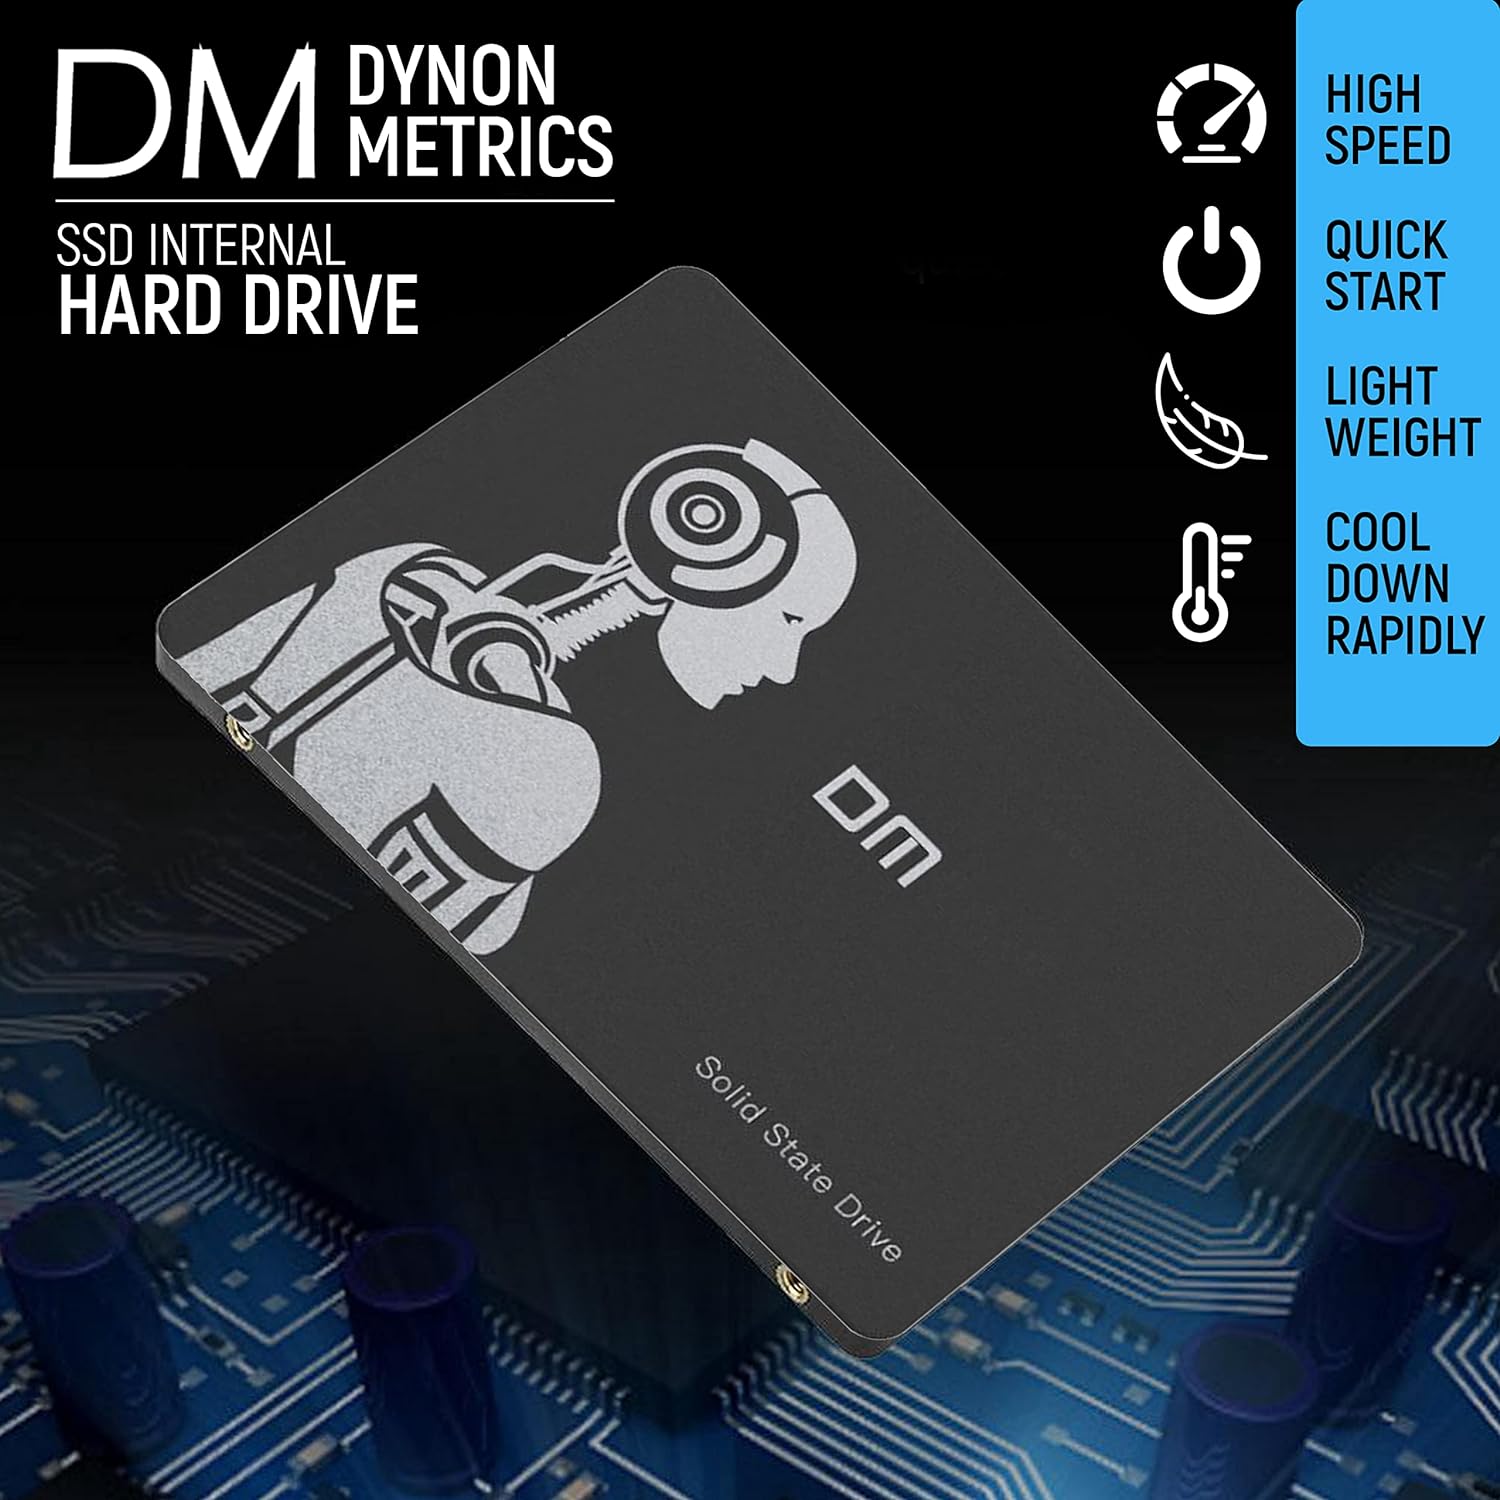 Dynon Metrics SSD Internal Hard Drive – 2.5 Inch High-Speed Internal SSD – SATA 3 Speed Class 6GBPS Solid State Drive – Matte Grey Finish – Low Temperature Regulation - 1TB